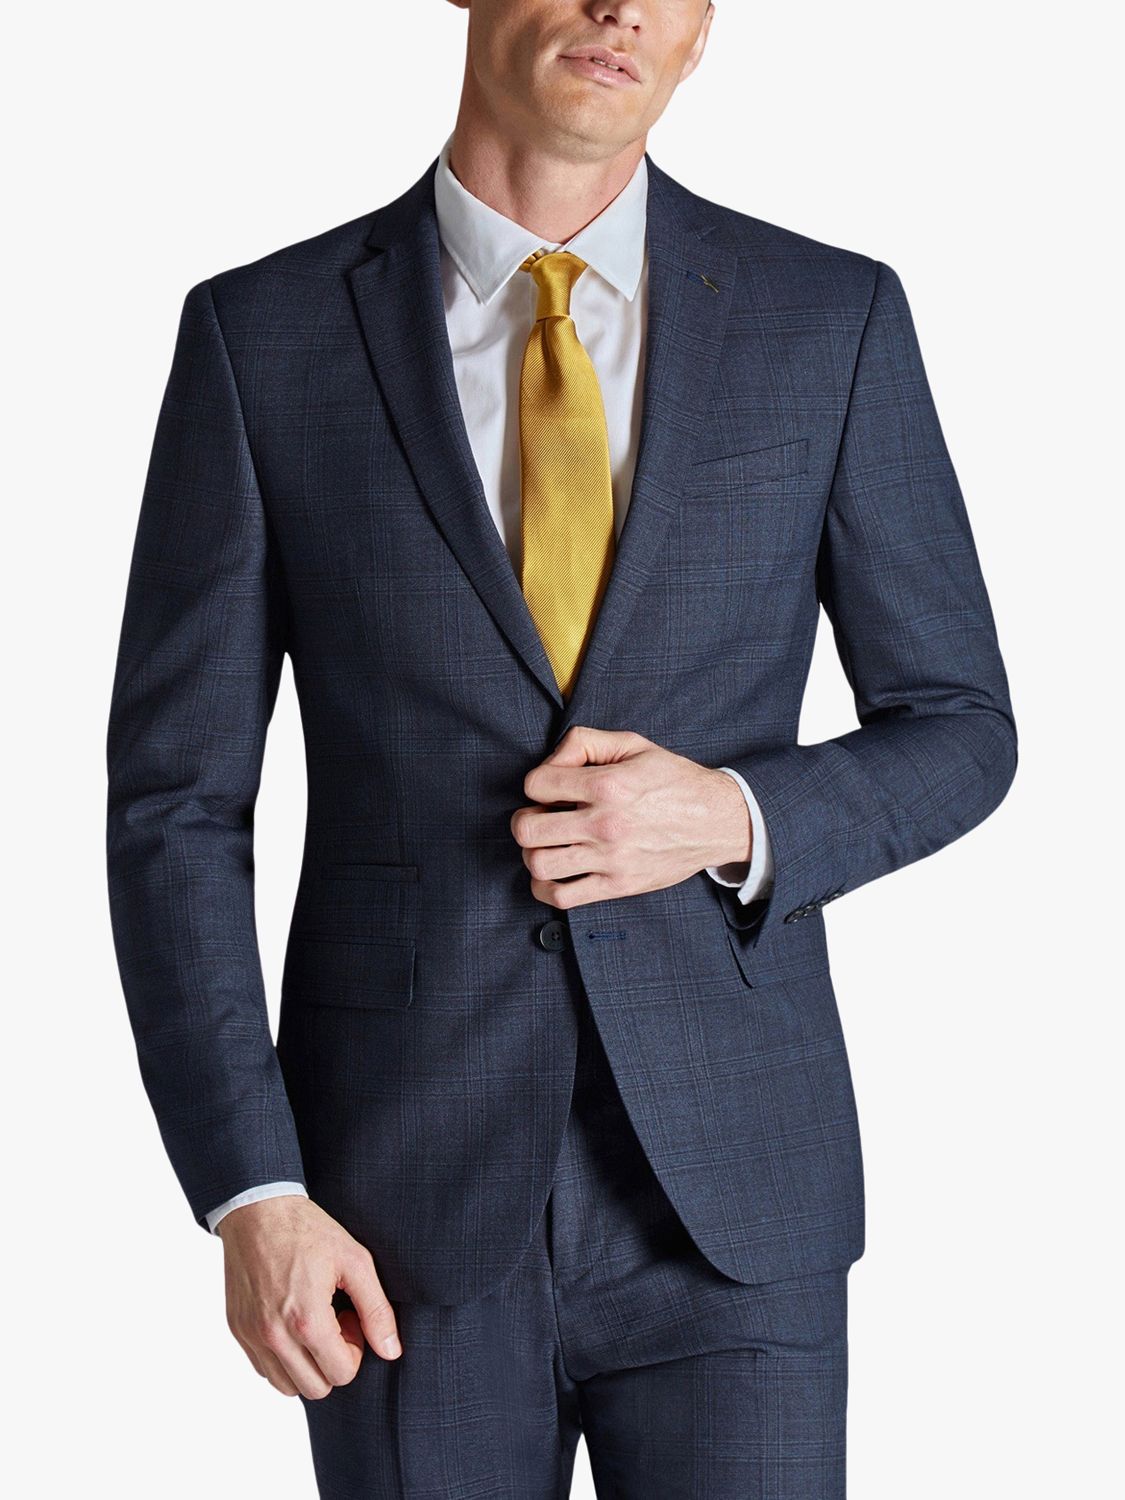 Ted Baker Ara Slim Fit Textured Check Wool Blend Suit Jacket, Navy, 42S